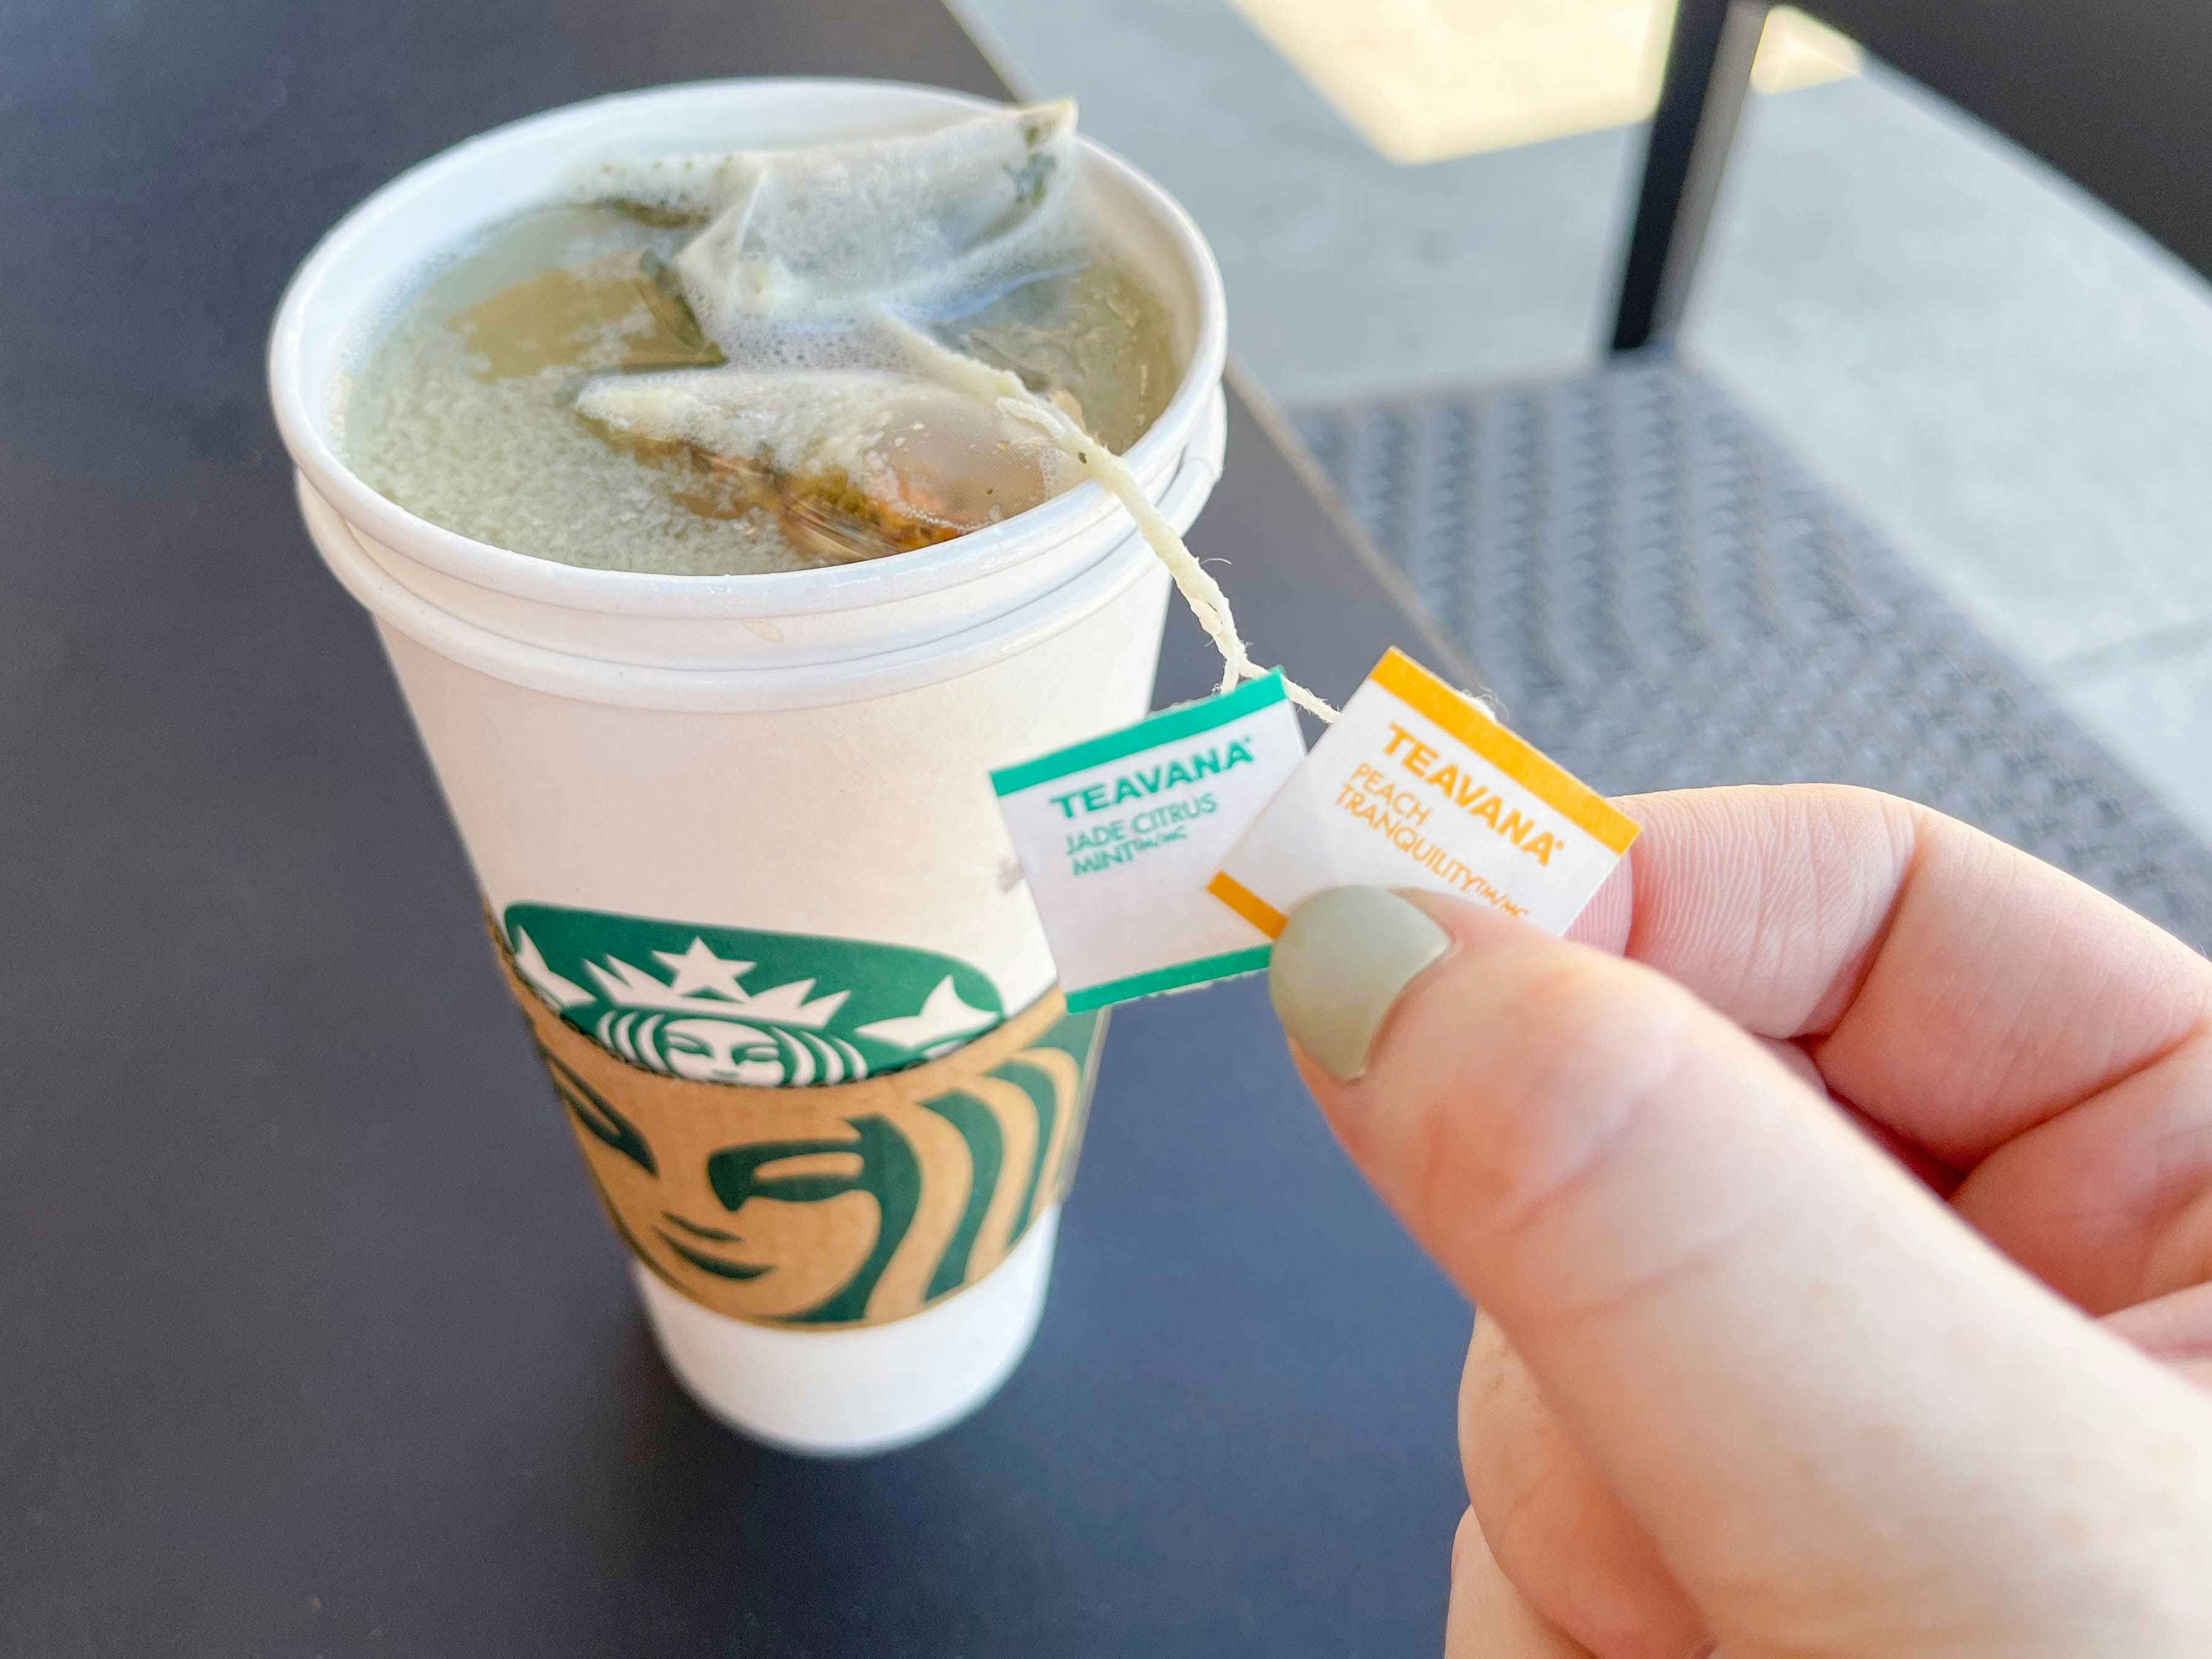 Starbucks Medicine Ball Tea - Cheaper at Home